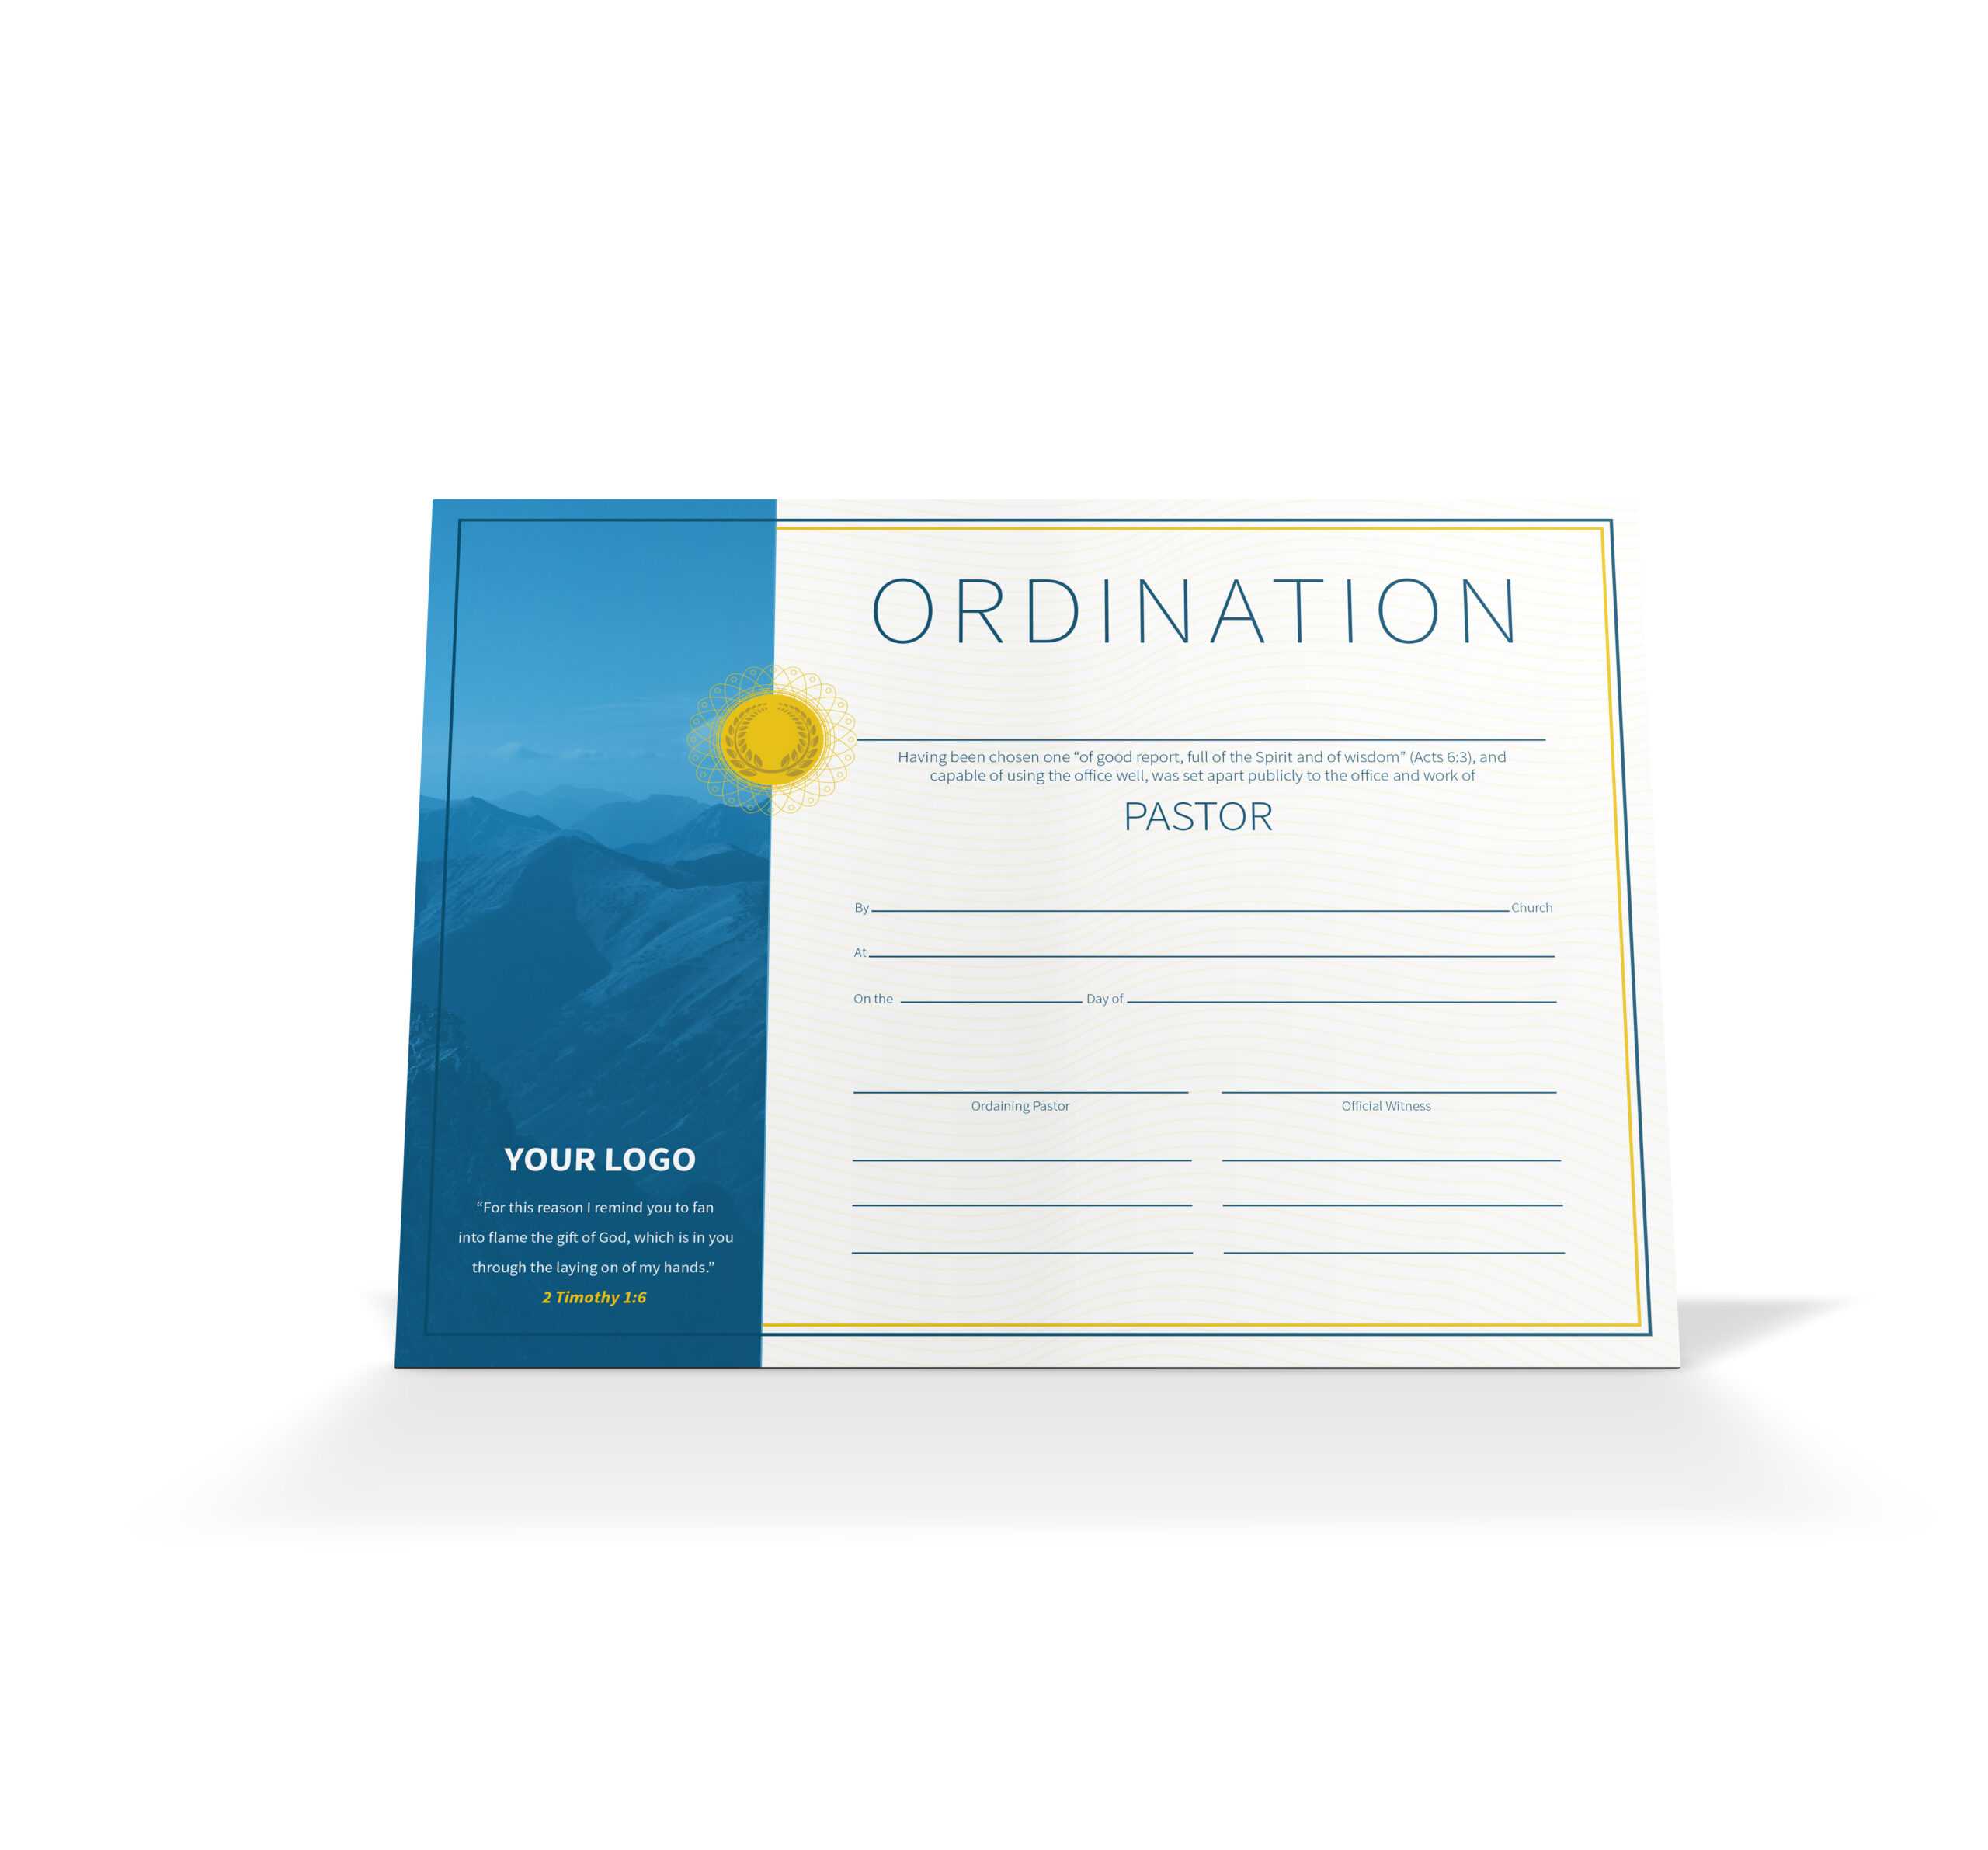 Pastor Ordination Certificate – Vineyard Digital Membership Intended For Free Ordination Certificate Template